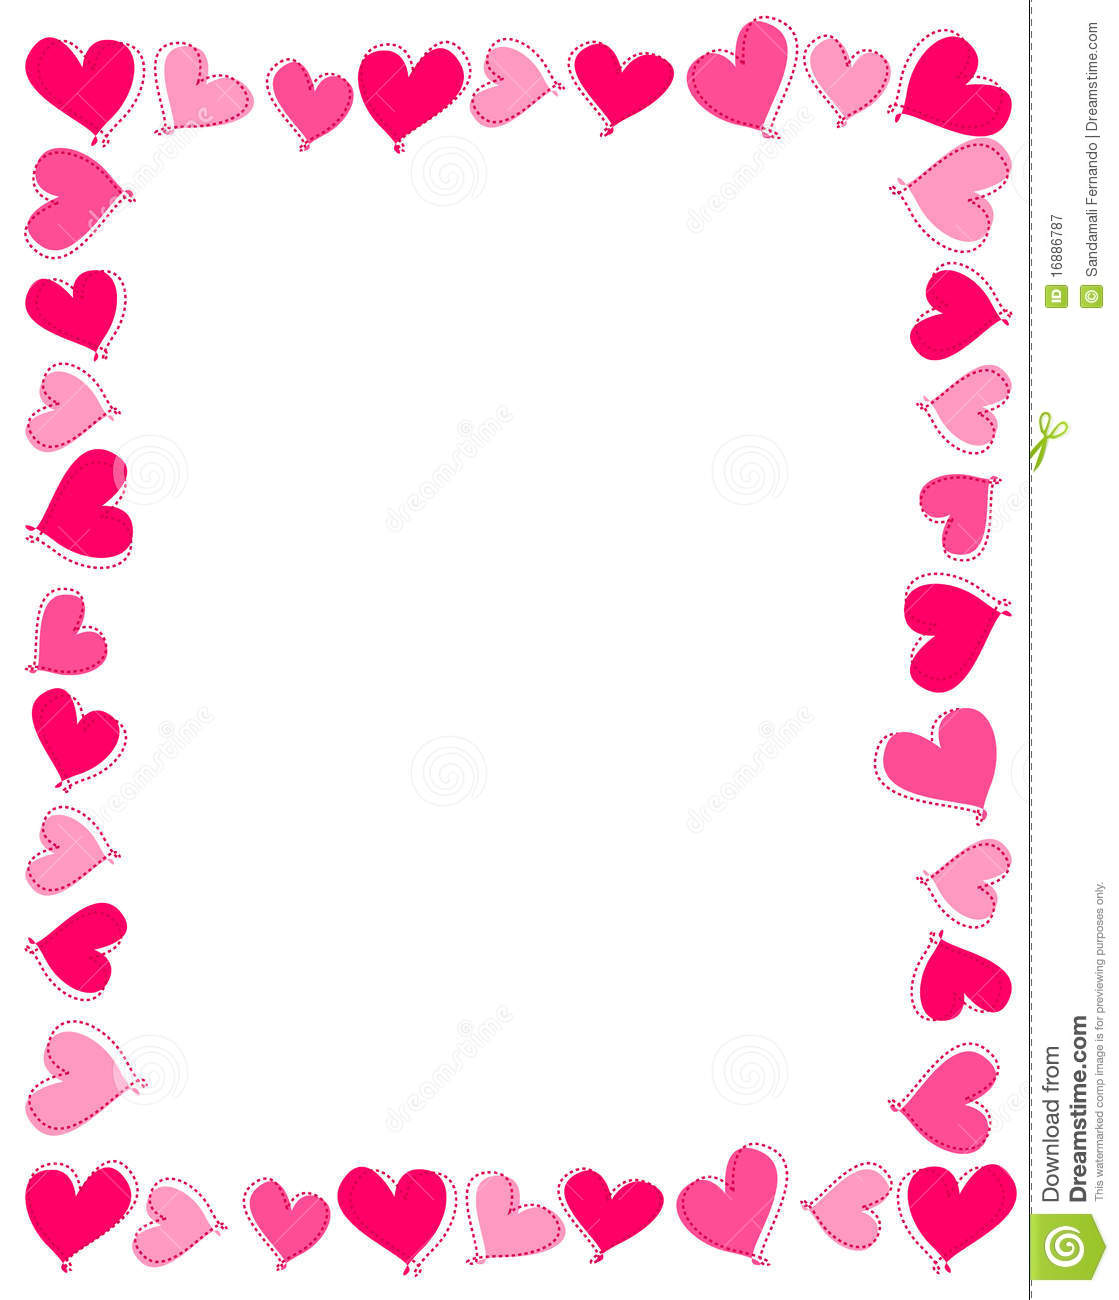 Pink Hearts Border Royalty Free Stock Photography   Image  16886787